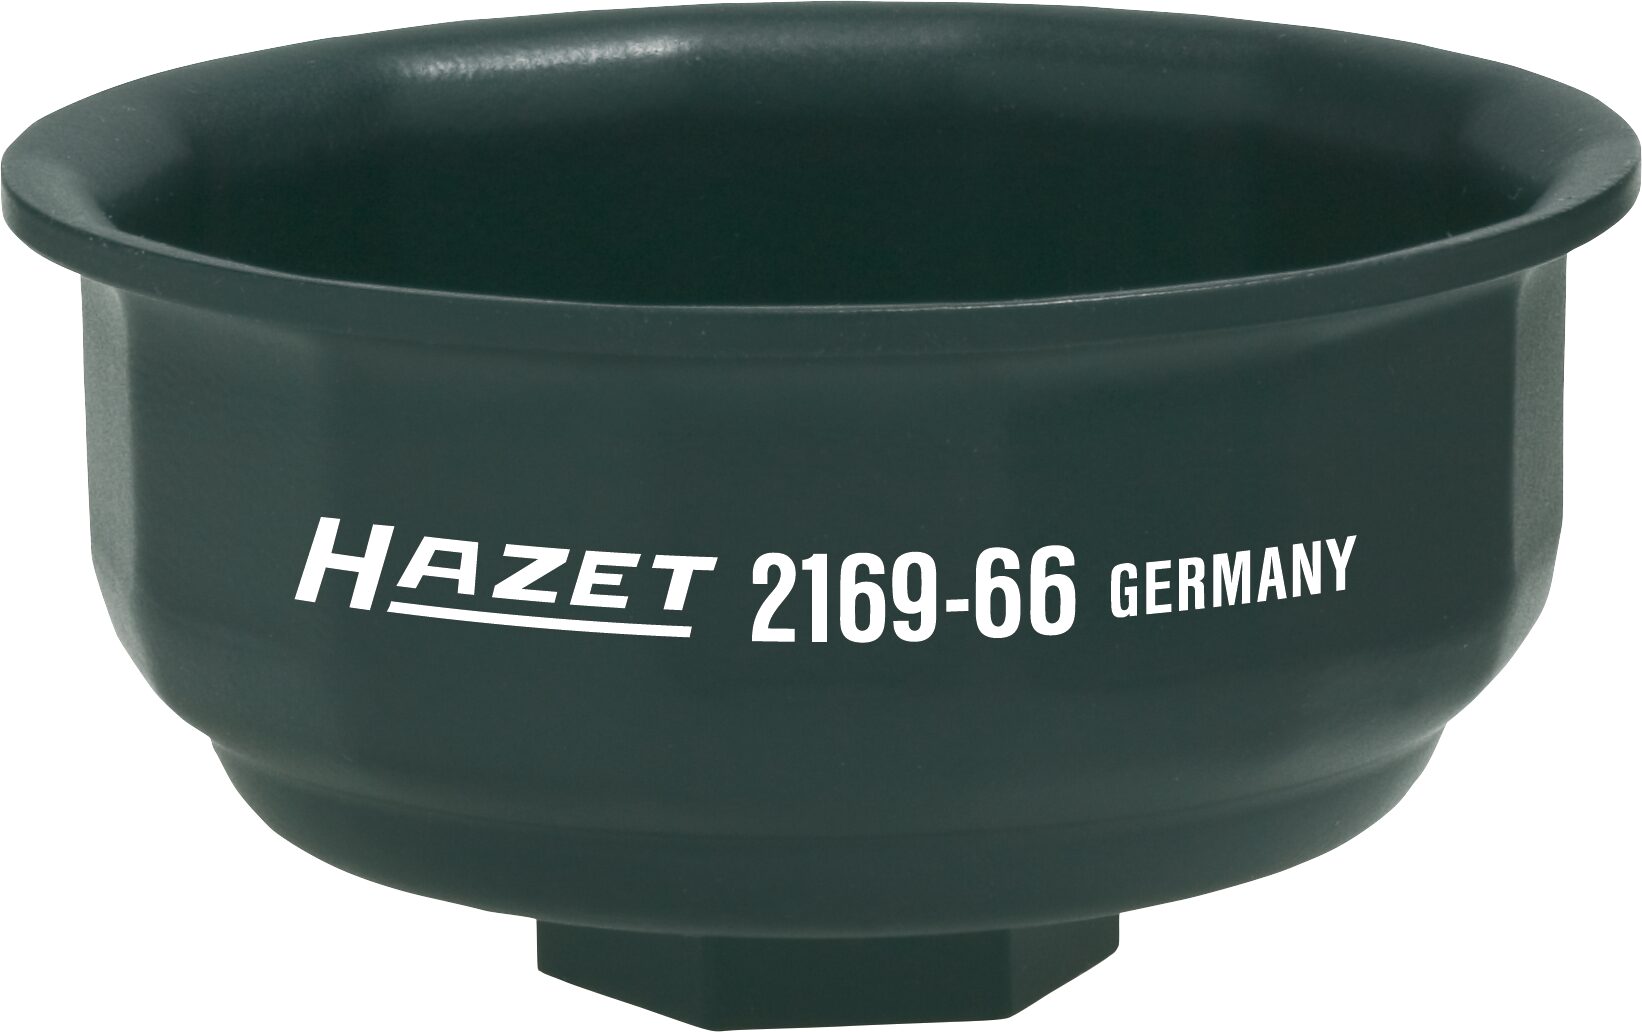 HAZET Ölfilter-Schlüssel 2169-66 · Vierkant hohl 12,5 mm (1/2 Zoll) · Rillenprofil · 76 mm